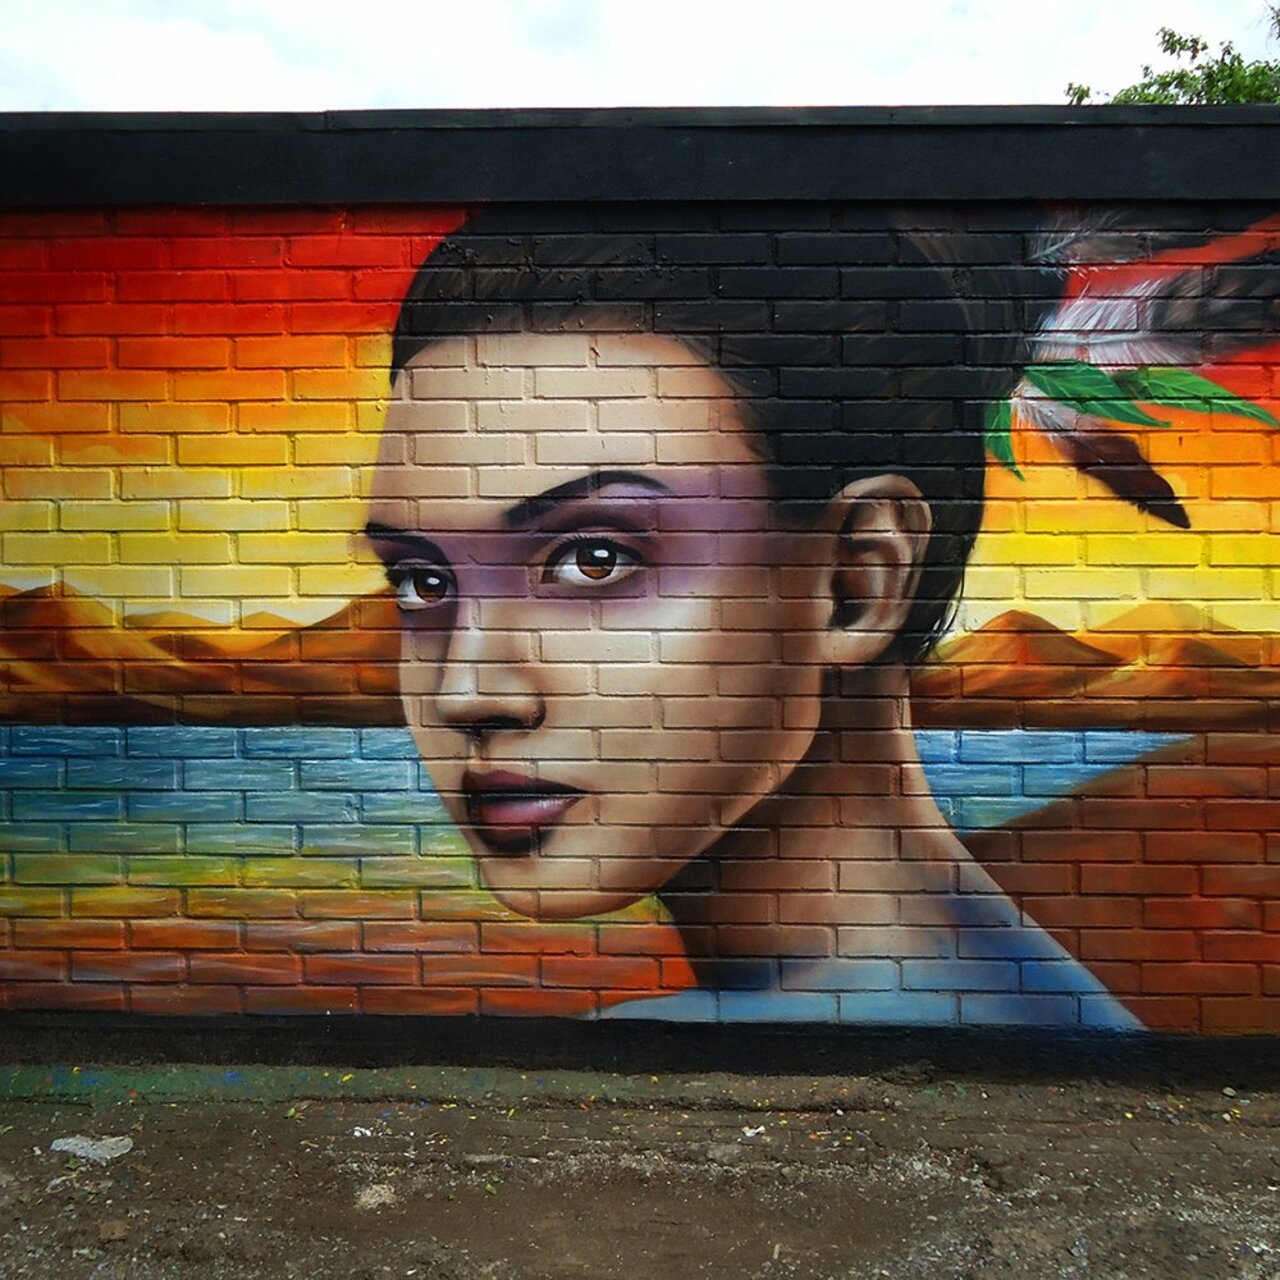 RT @alan_kode: #graffiti #mural #mujer #indigena #streetart #artegrafia #hacrew #artecallejero #puentealto #santiago #chile https://t.co/l9KPBEYYt6